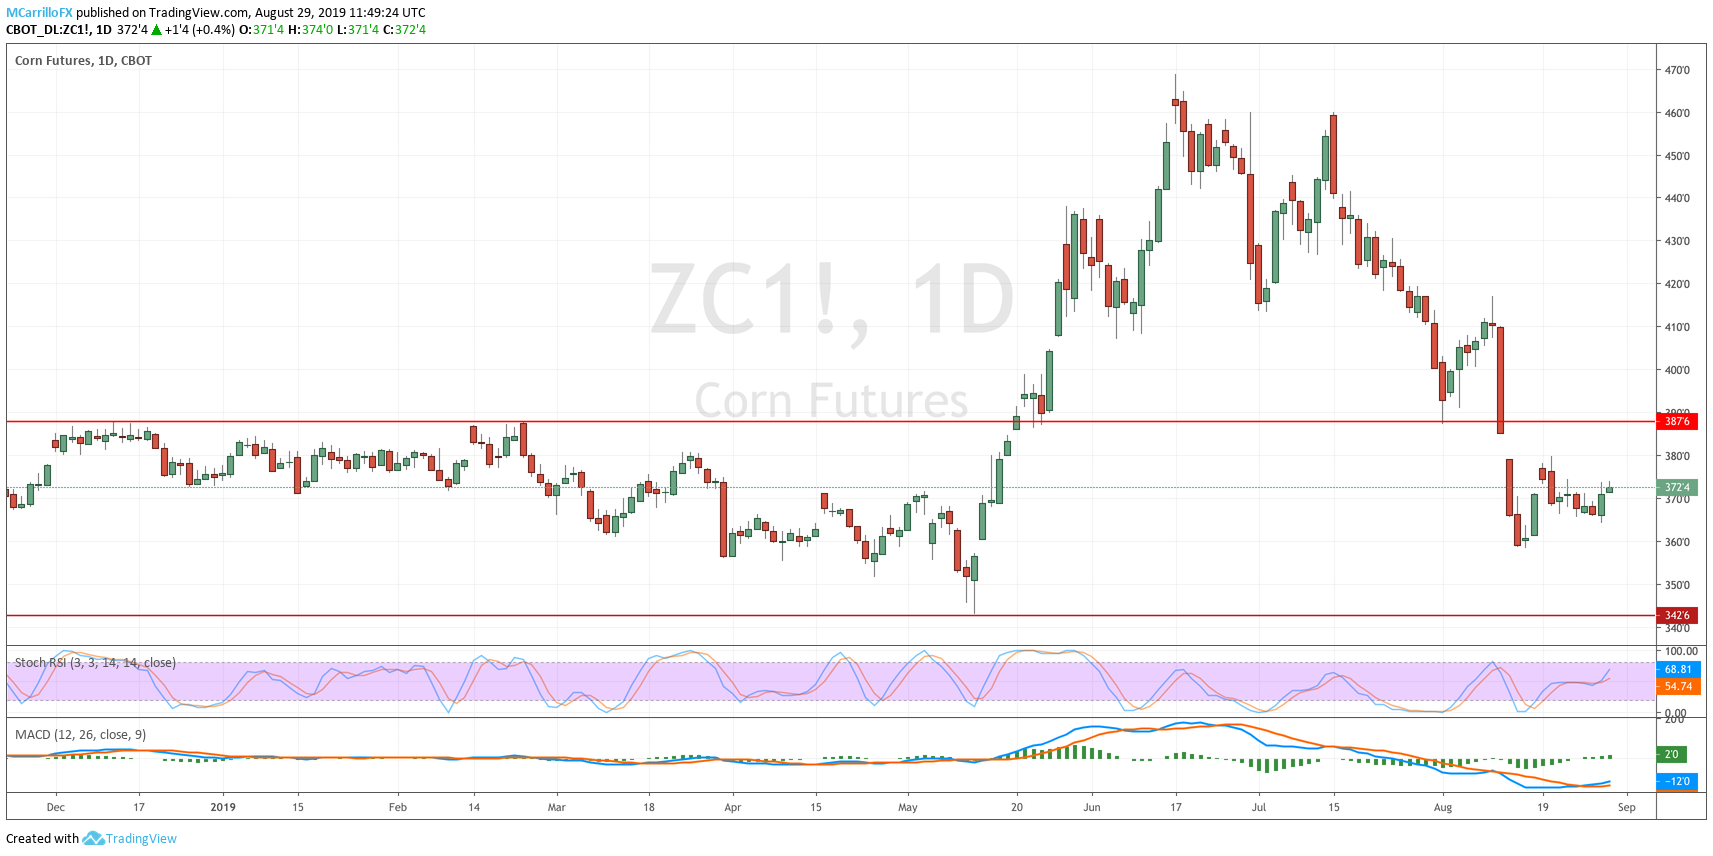 ZC1 Corn Futures 1-hour chart August 29